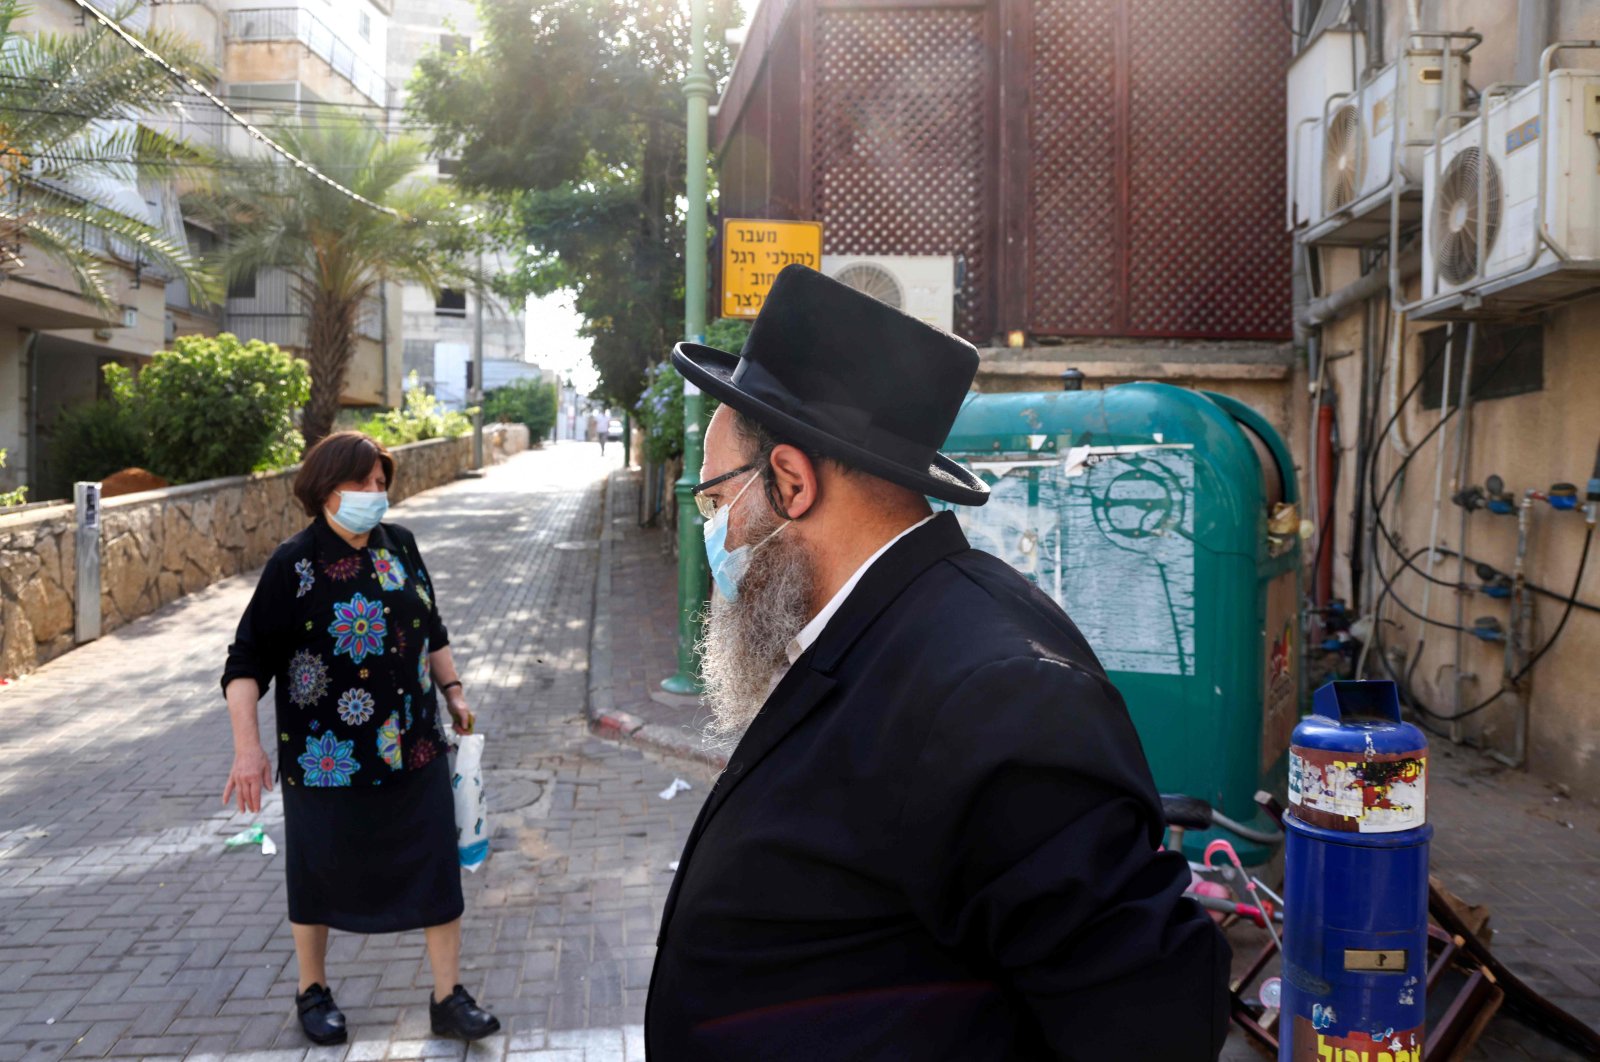 Ultra-Orthodox Jews wearing protective face masks walk in the ultra-Orthodox city of Bnei Brak, near Tel Aviv, on Sept. 6, 2020. (AFP Photo)